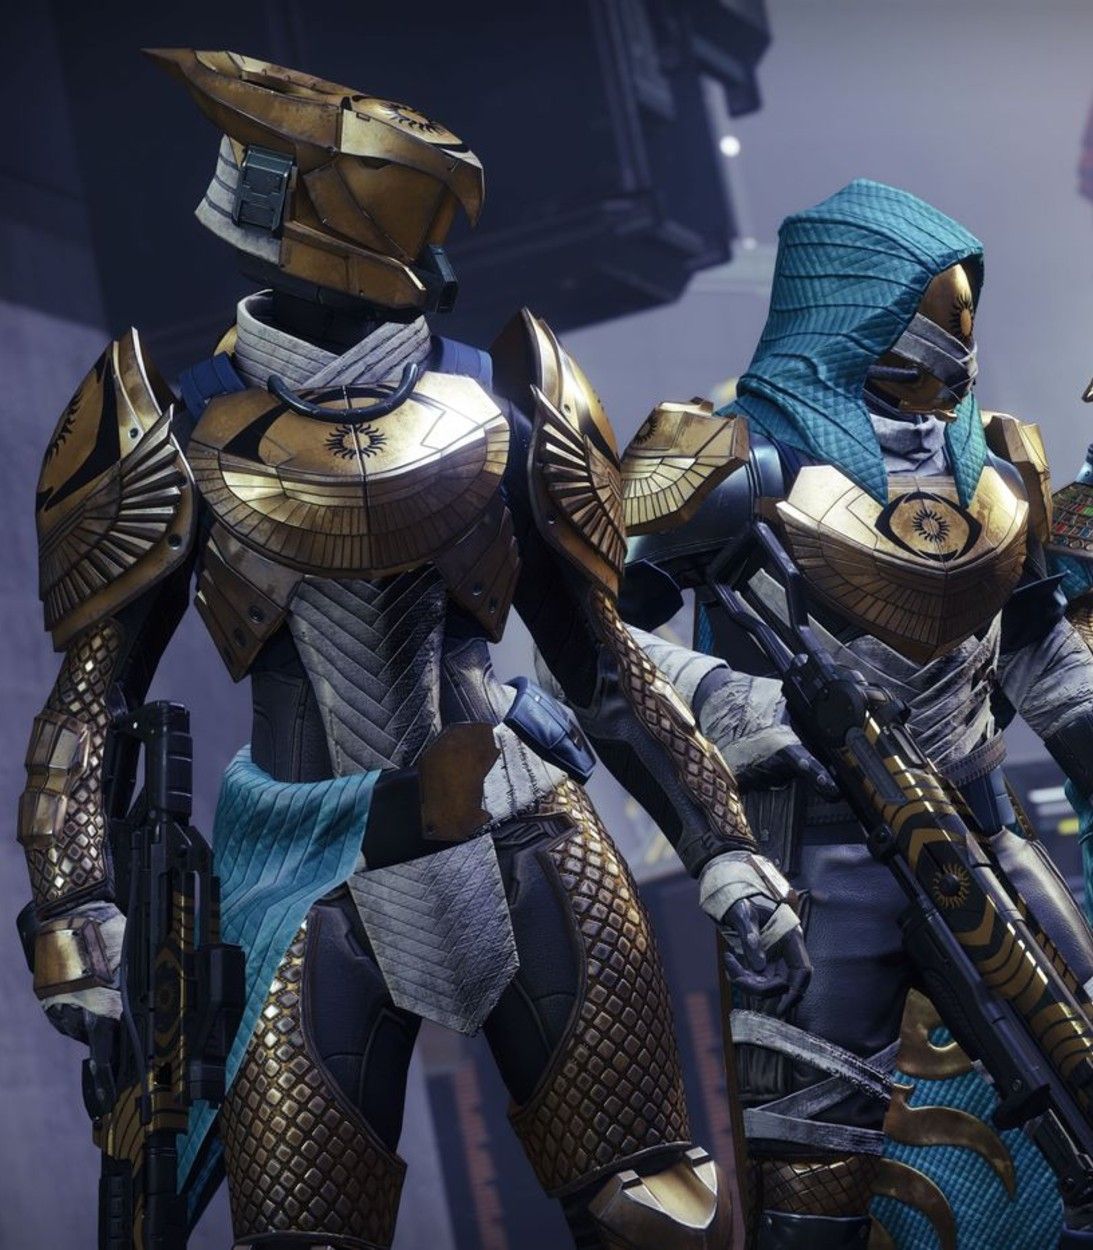 The bosses in Trials of Osiris in Destiny 2: Season of the Chosen